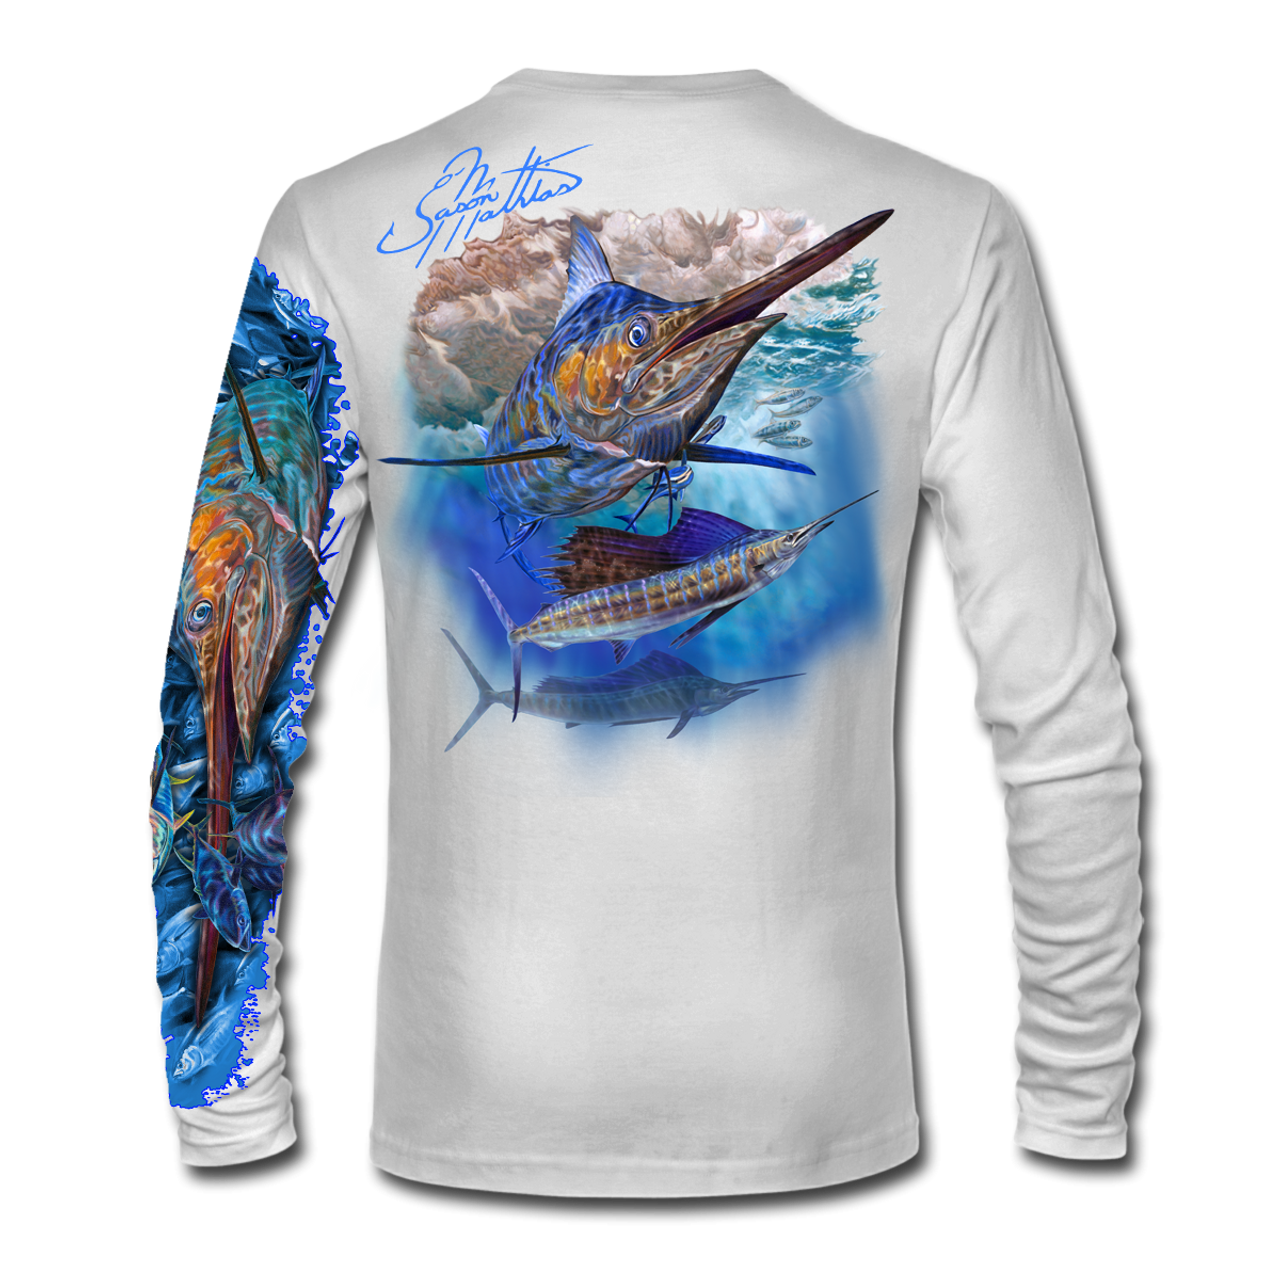 LS High Performance tee shirt (Marlin Sailfish) - Jason Mathias Art Studios